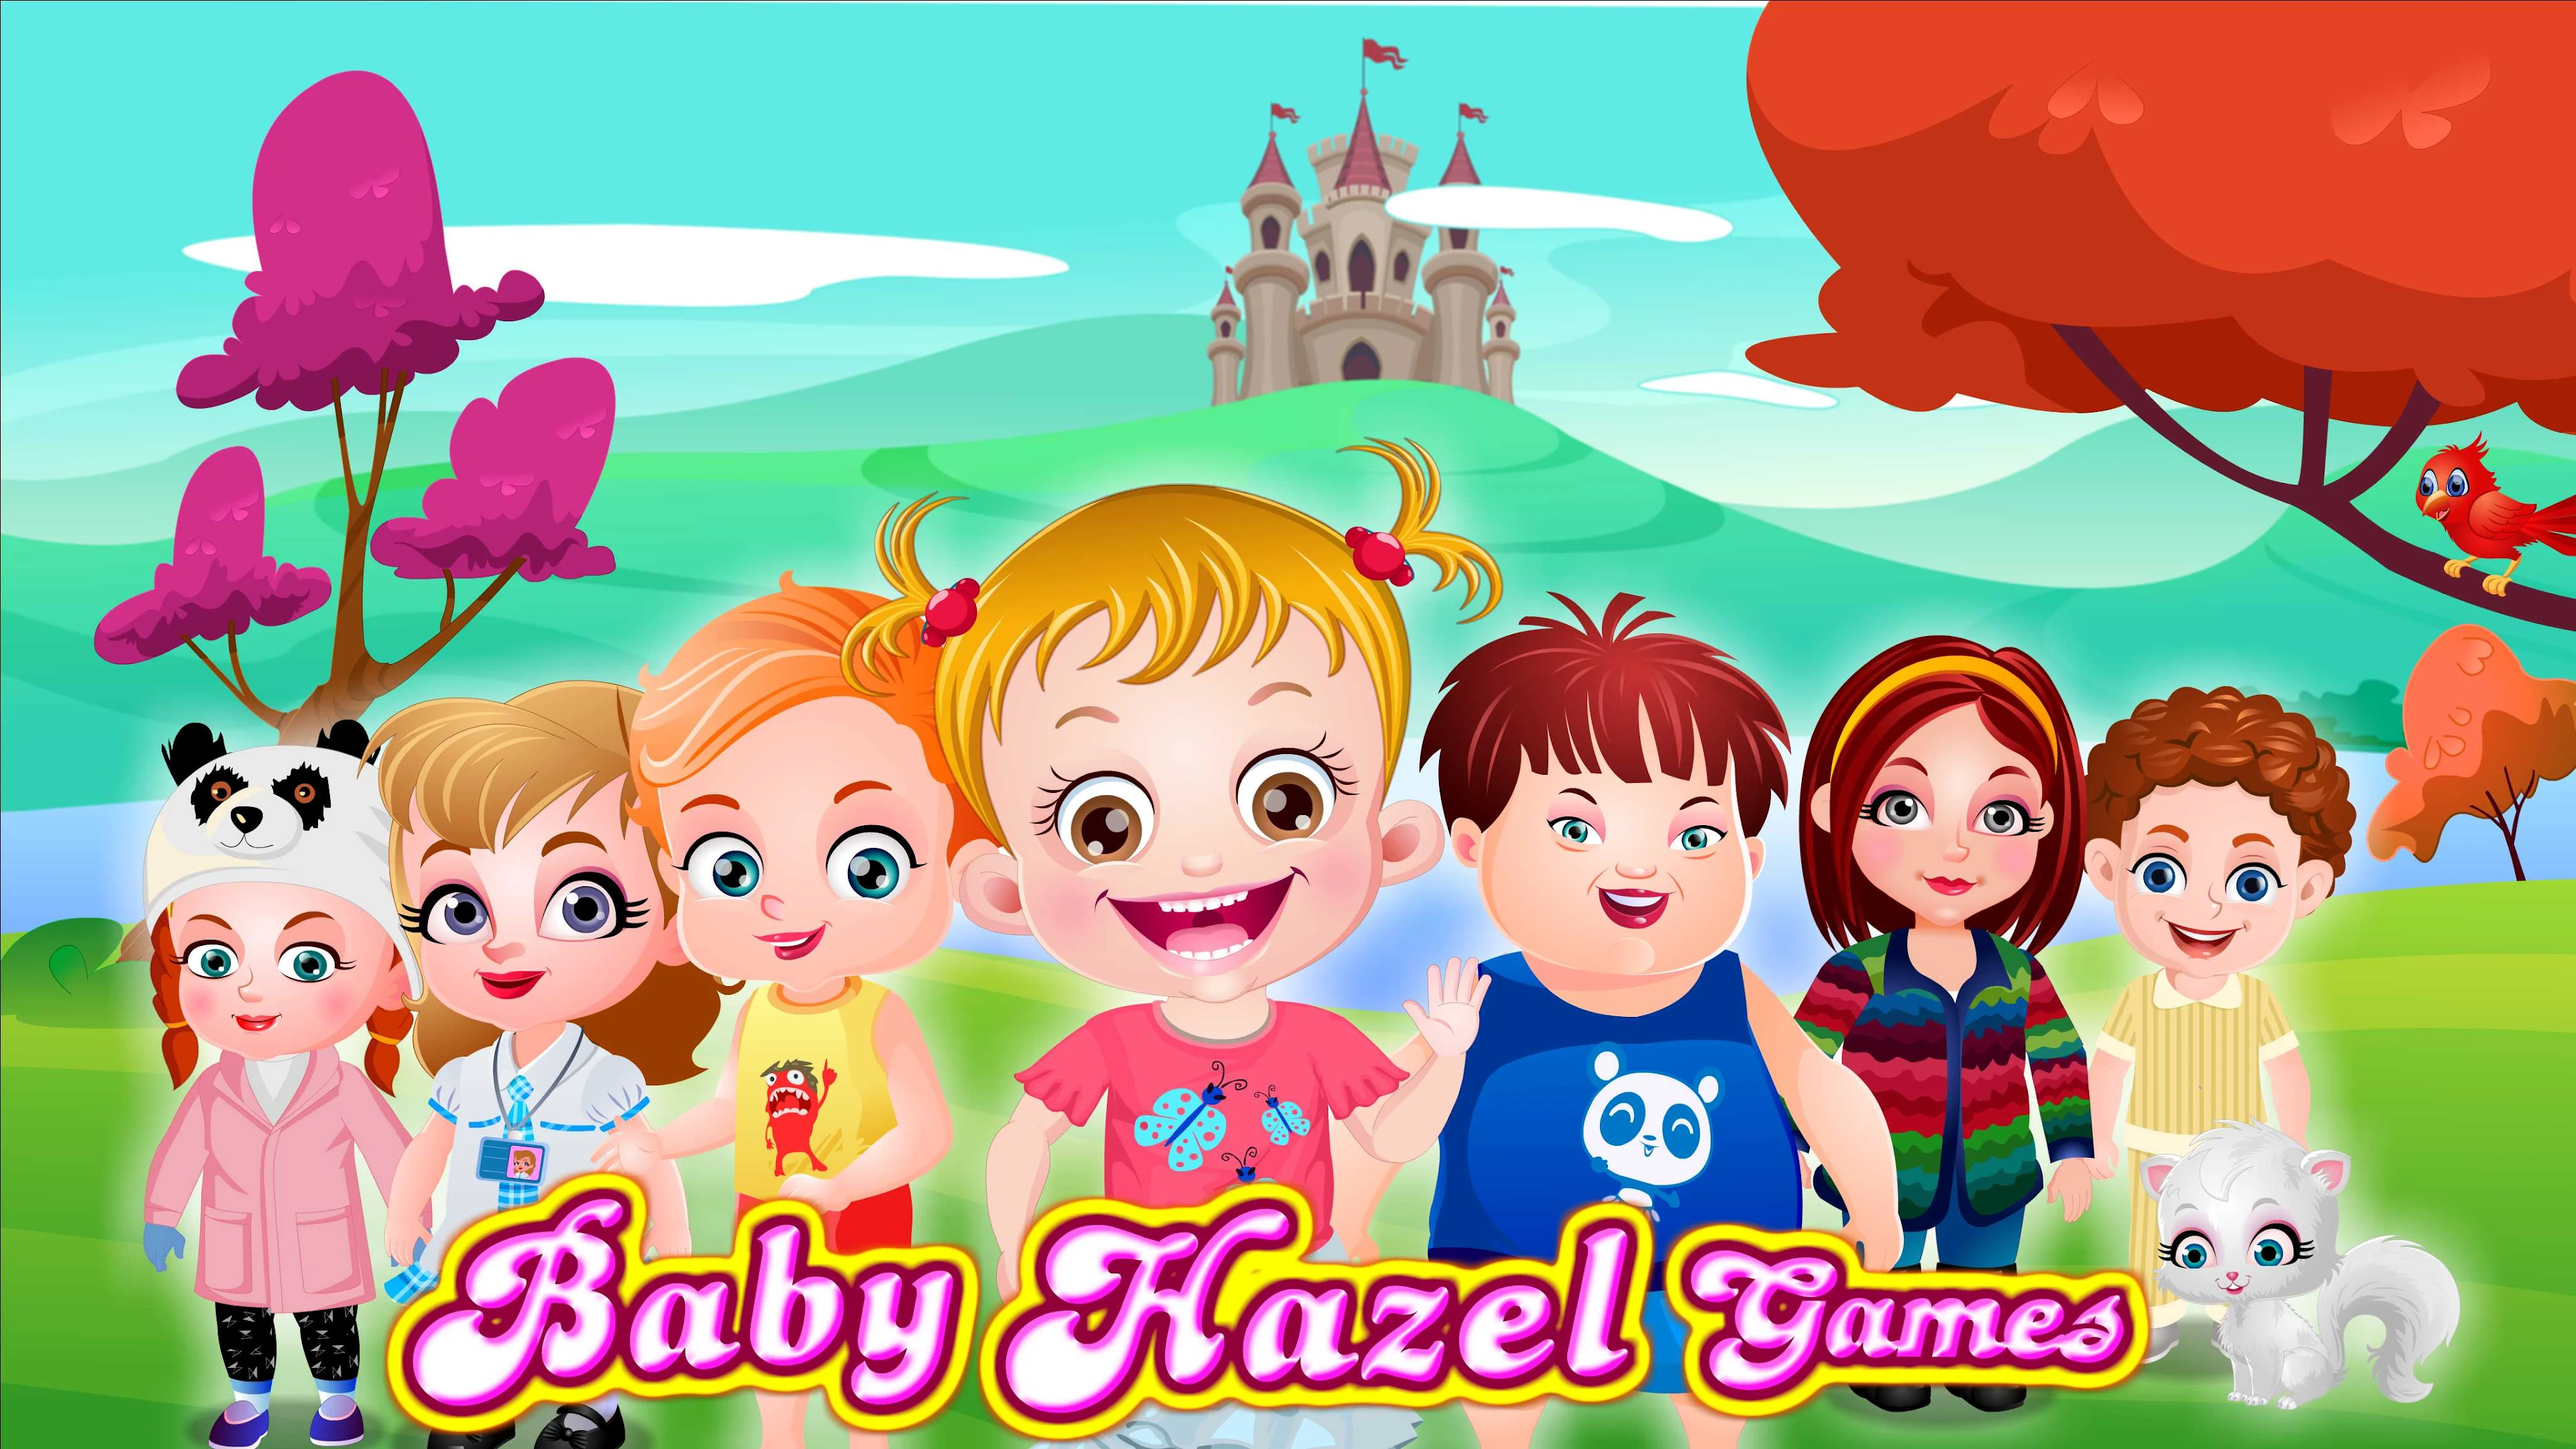 Girl Games - Play free online Baby Hazel Games